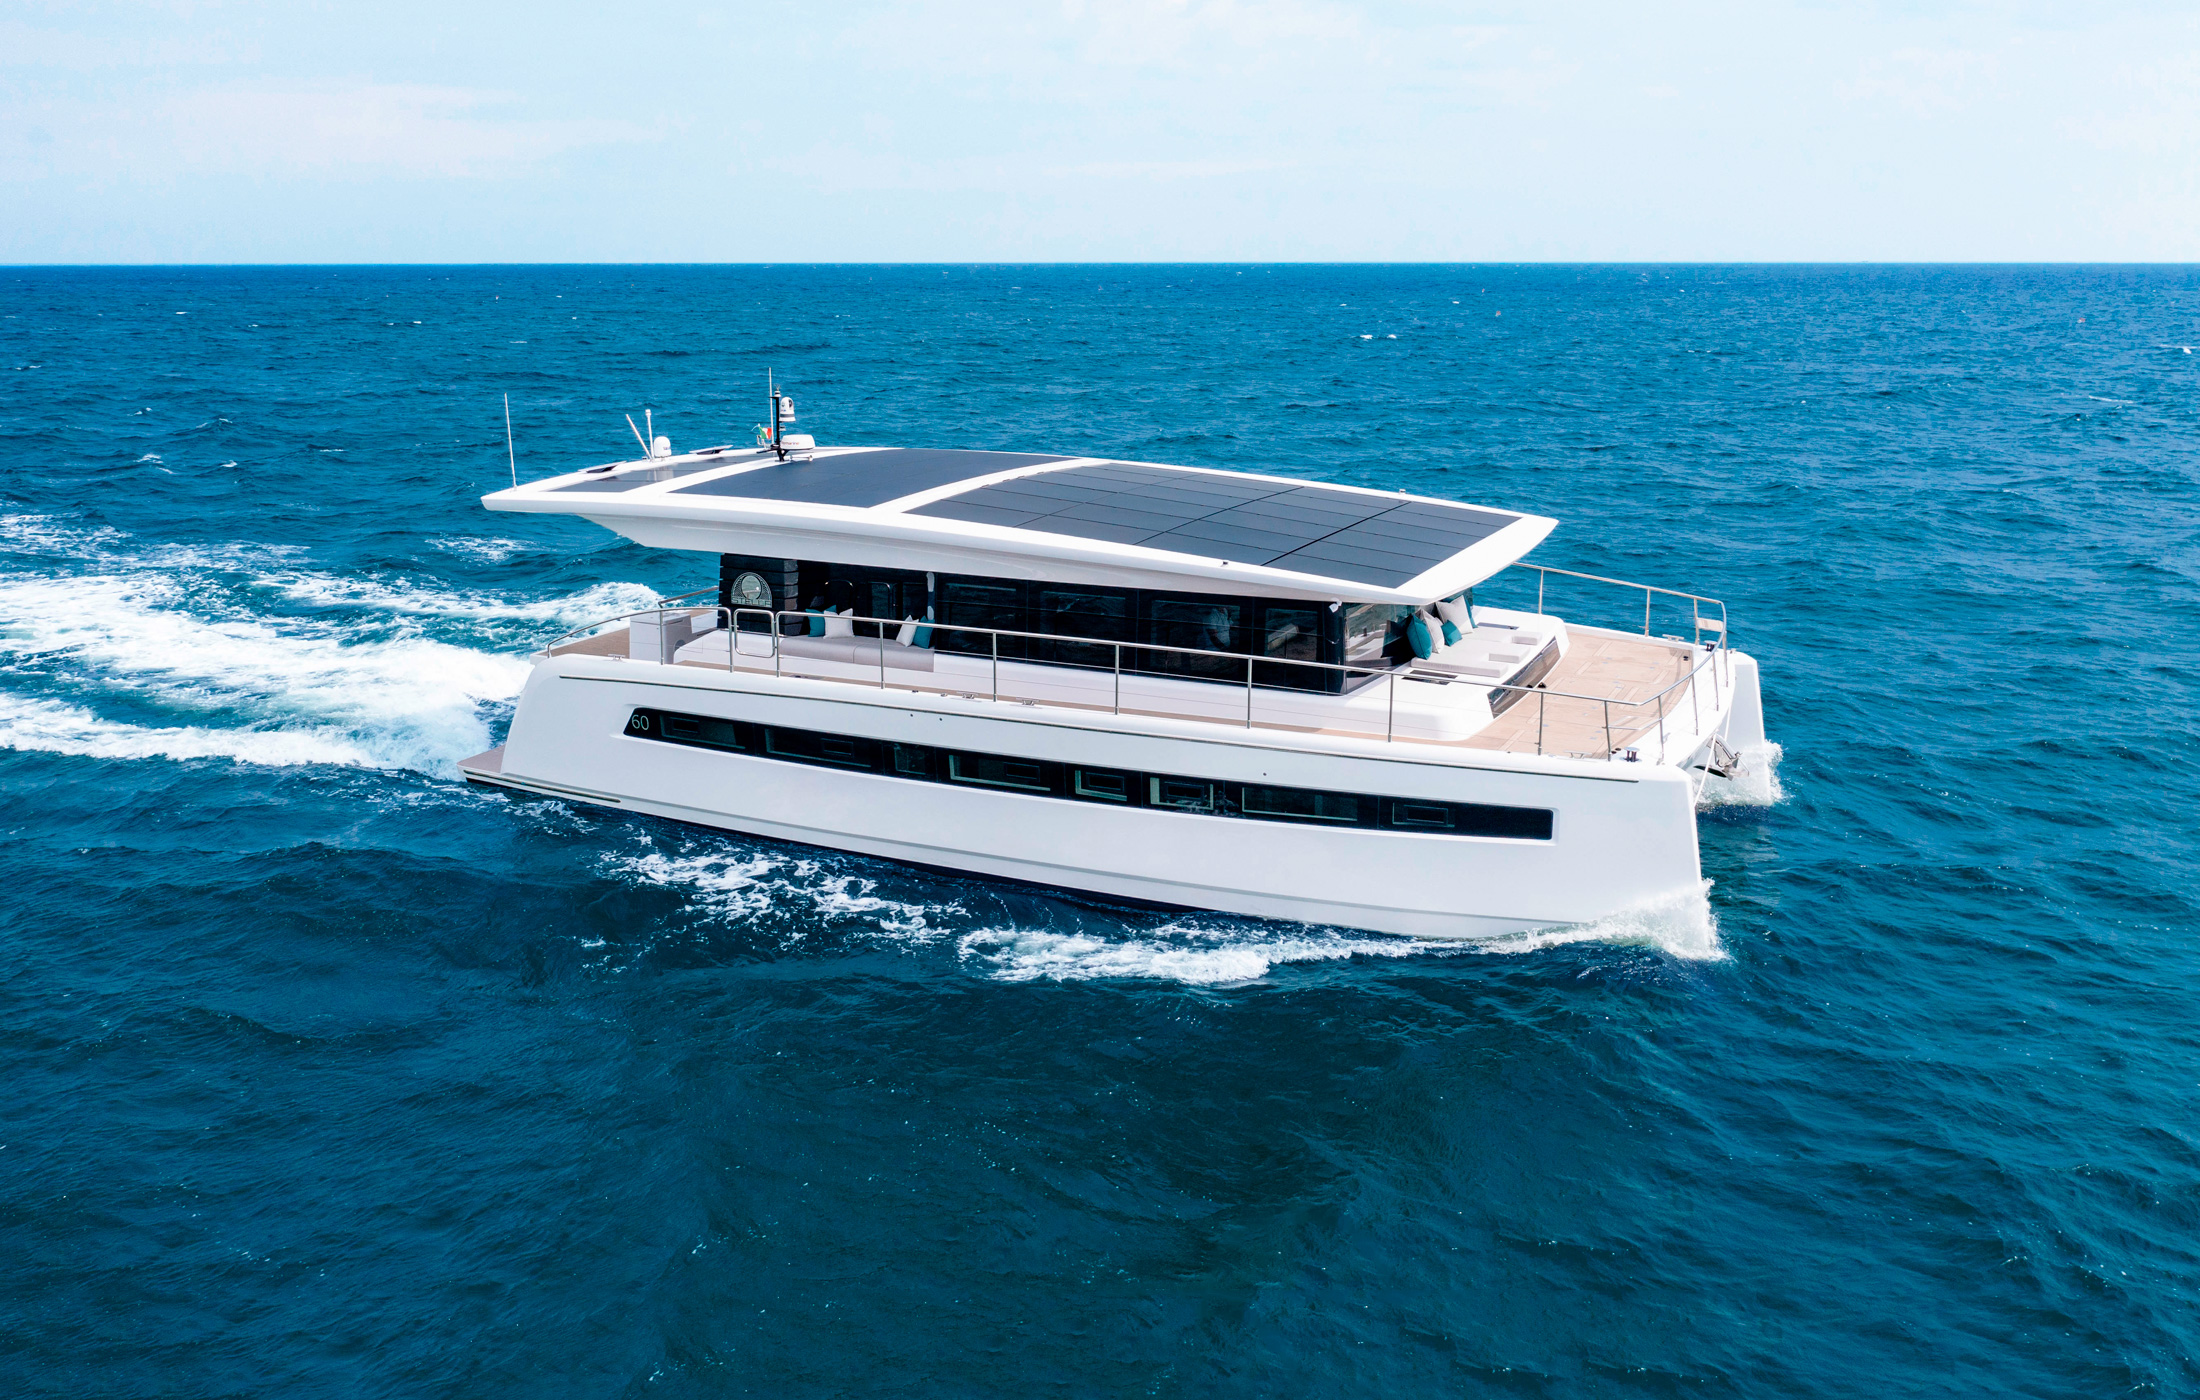 Solar-paneled yacht navigating the seas using solar energy